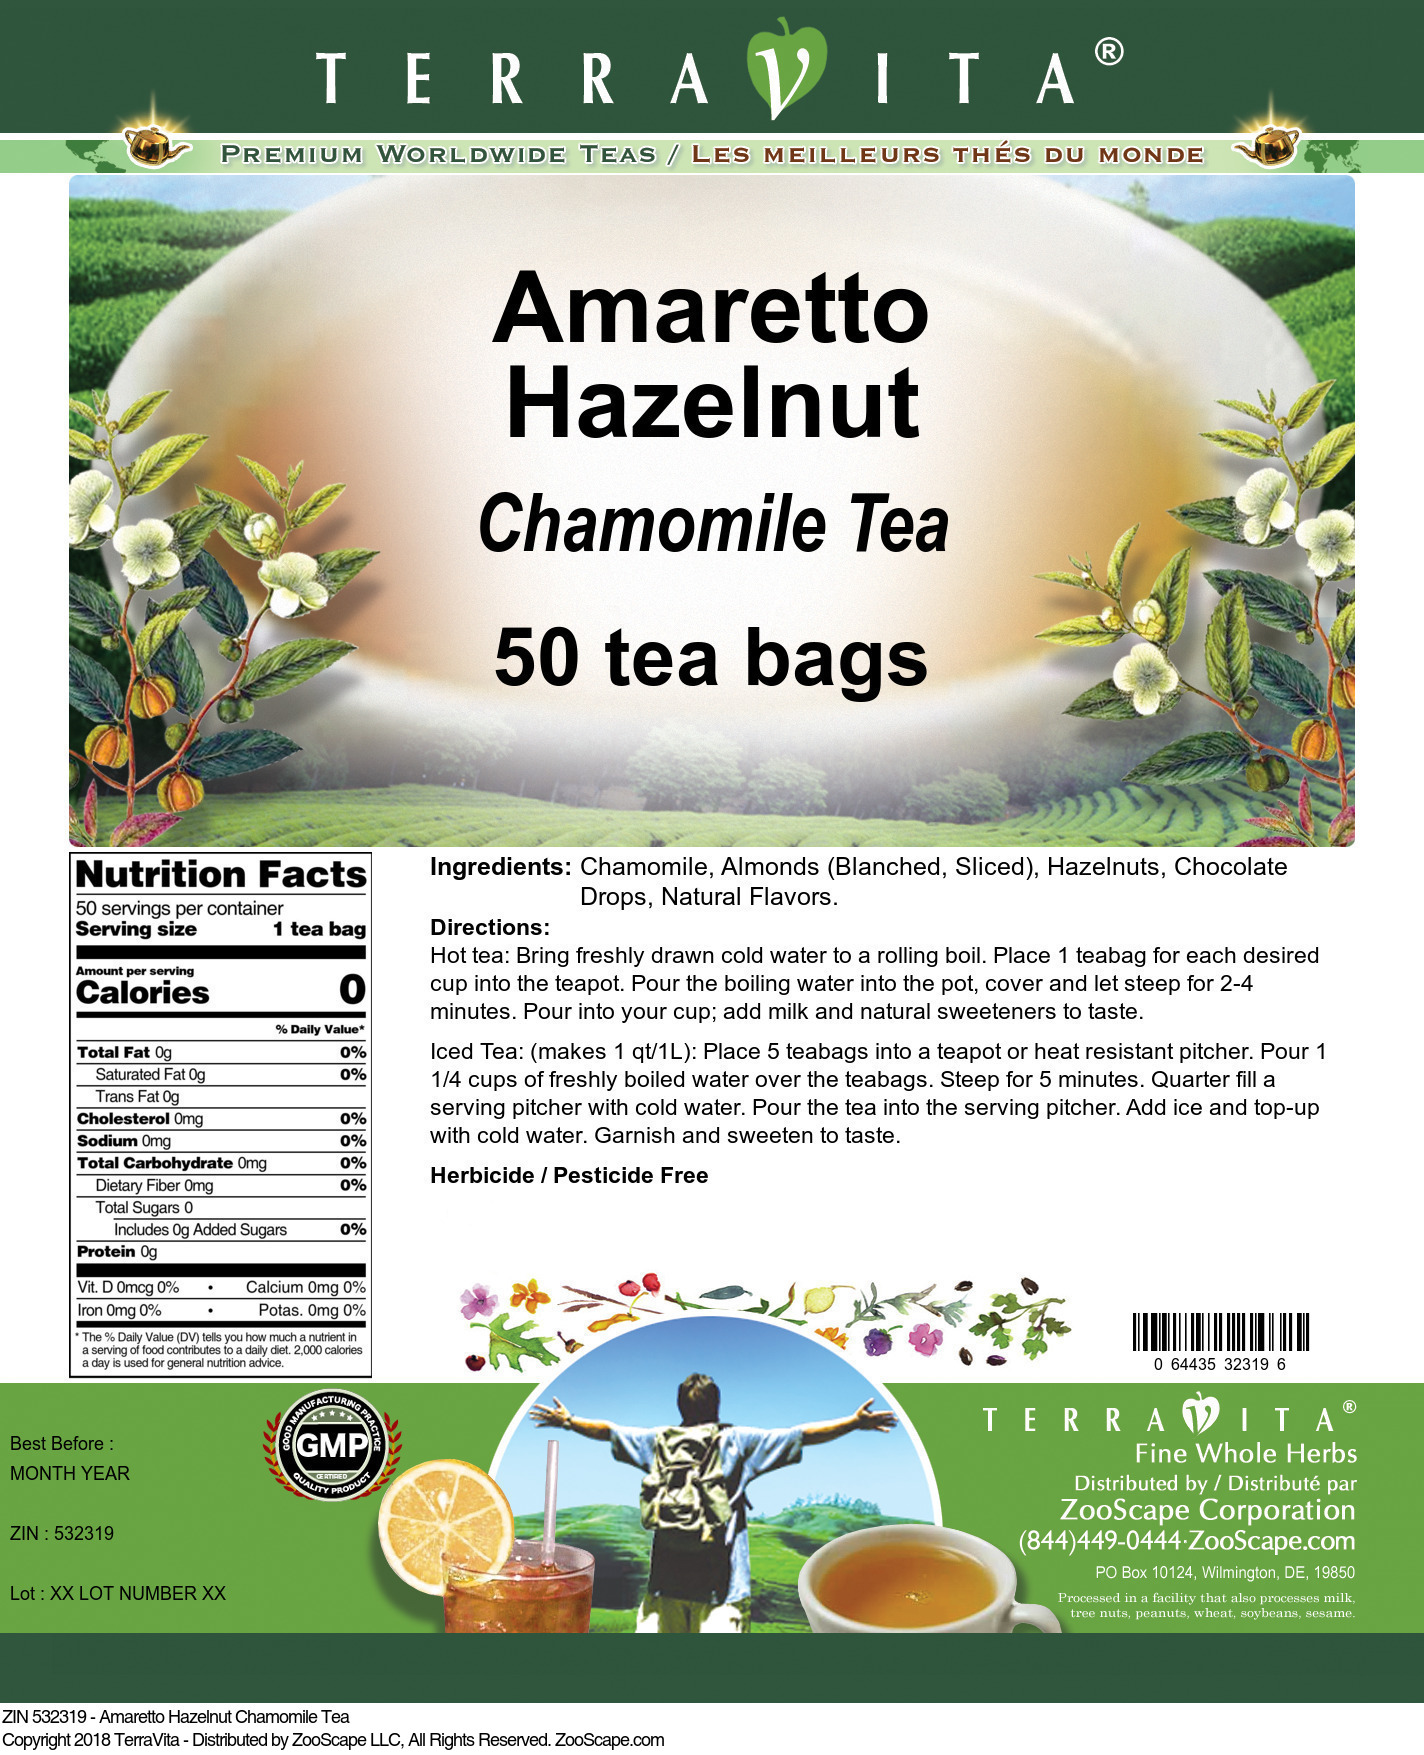 Amaretto Hazelnut Chamomile Tea - Label